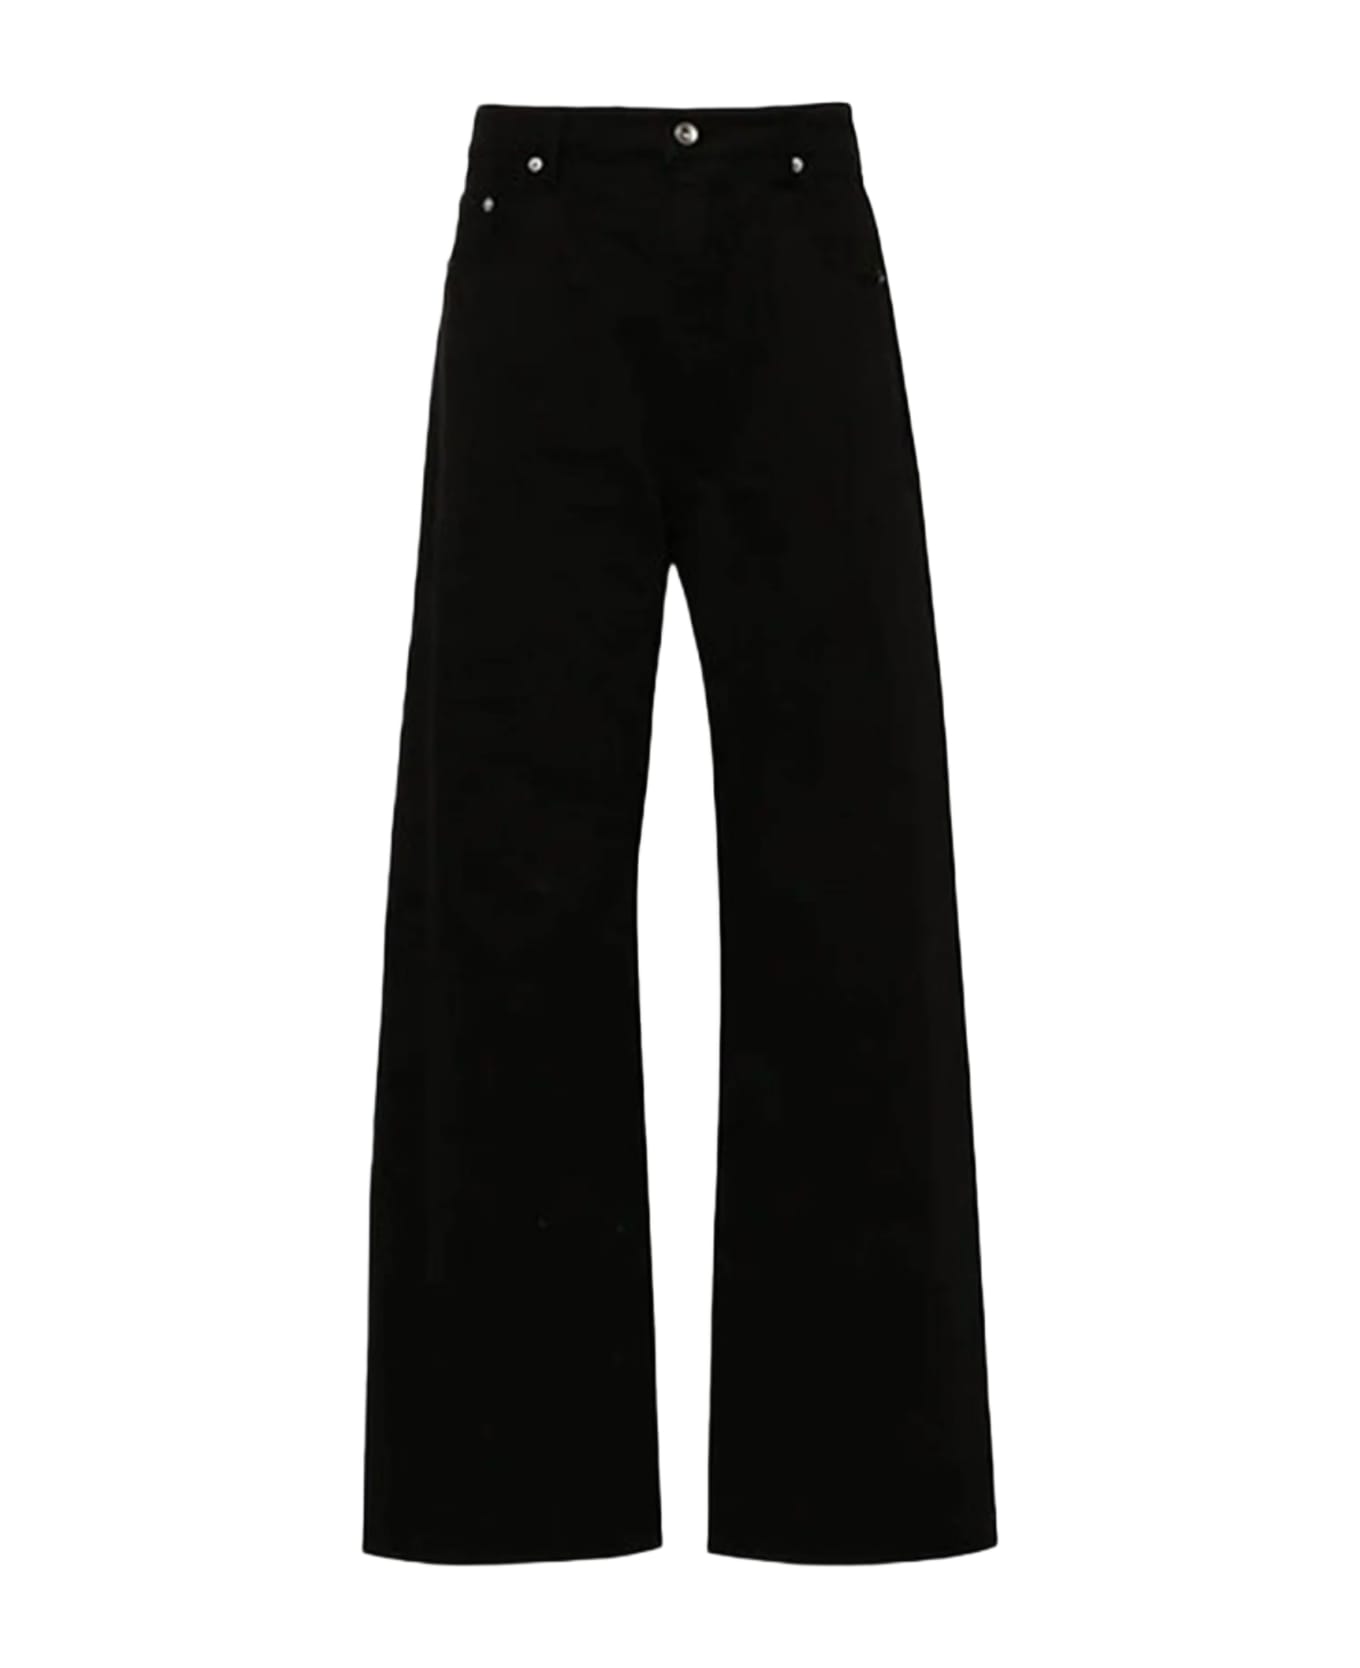 DRKSHDW Geth Jeans Black loose fit jeans - Geth Jeans - Nero